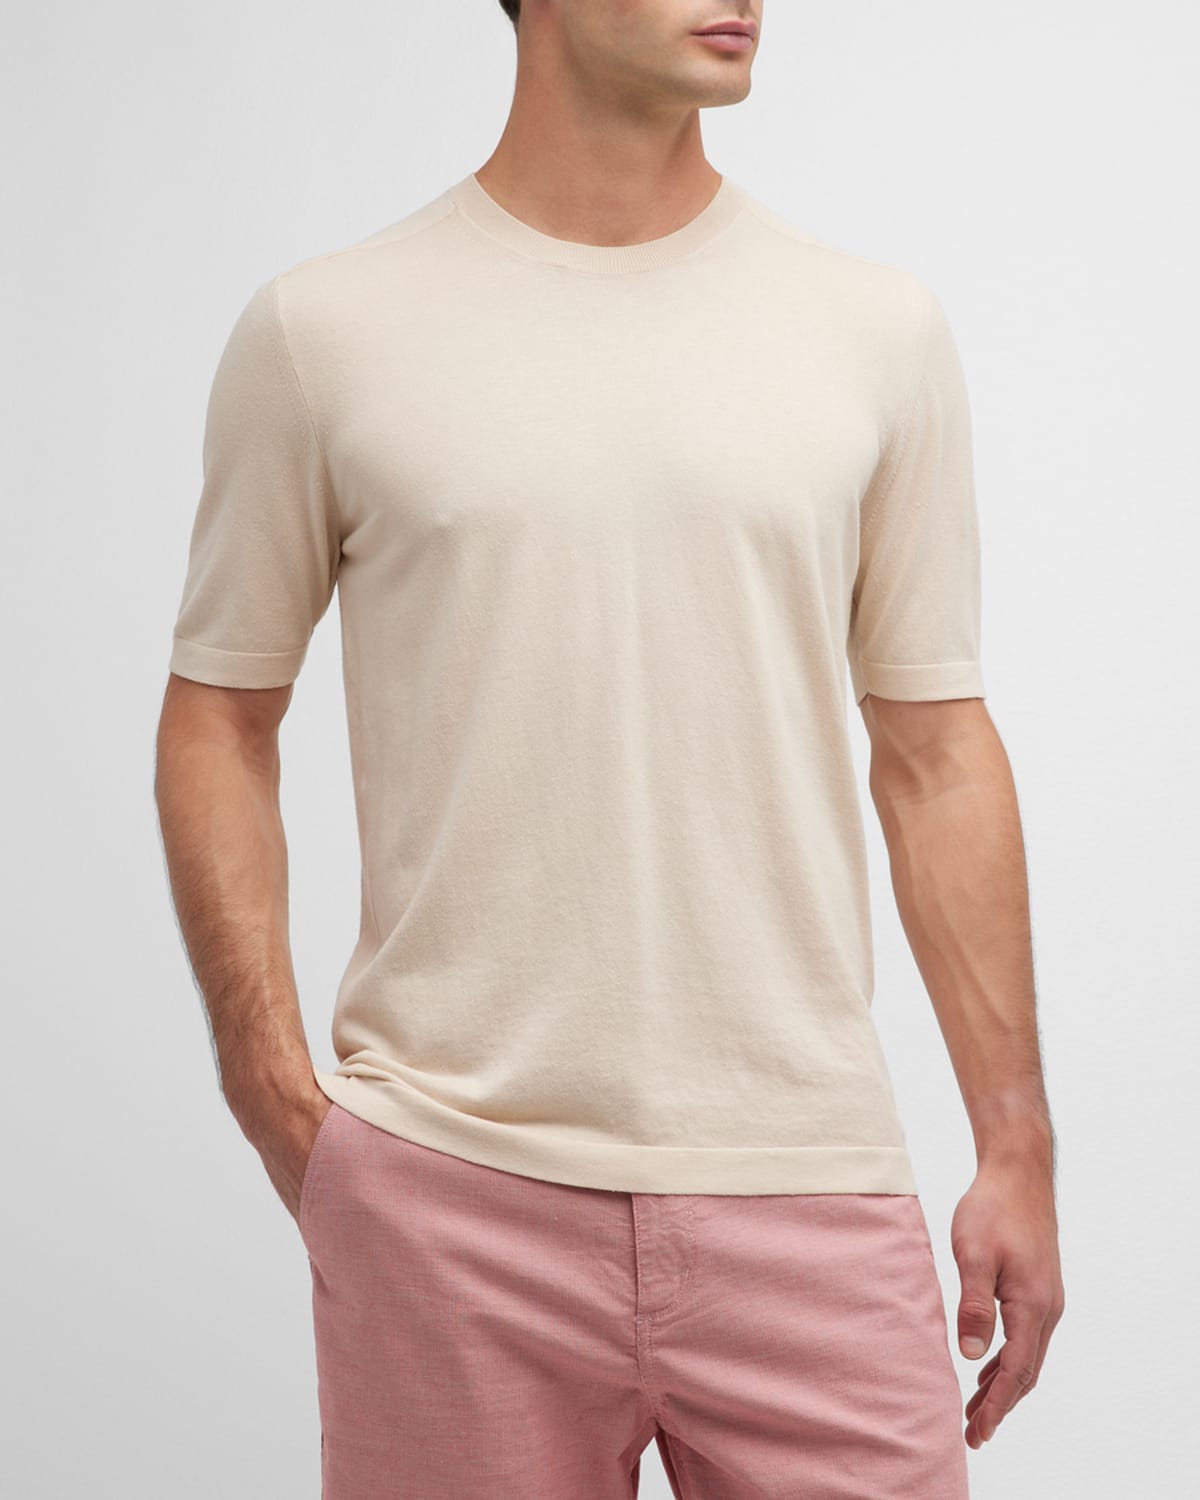 Men's Cotton-Silk Crew T-Shirt